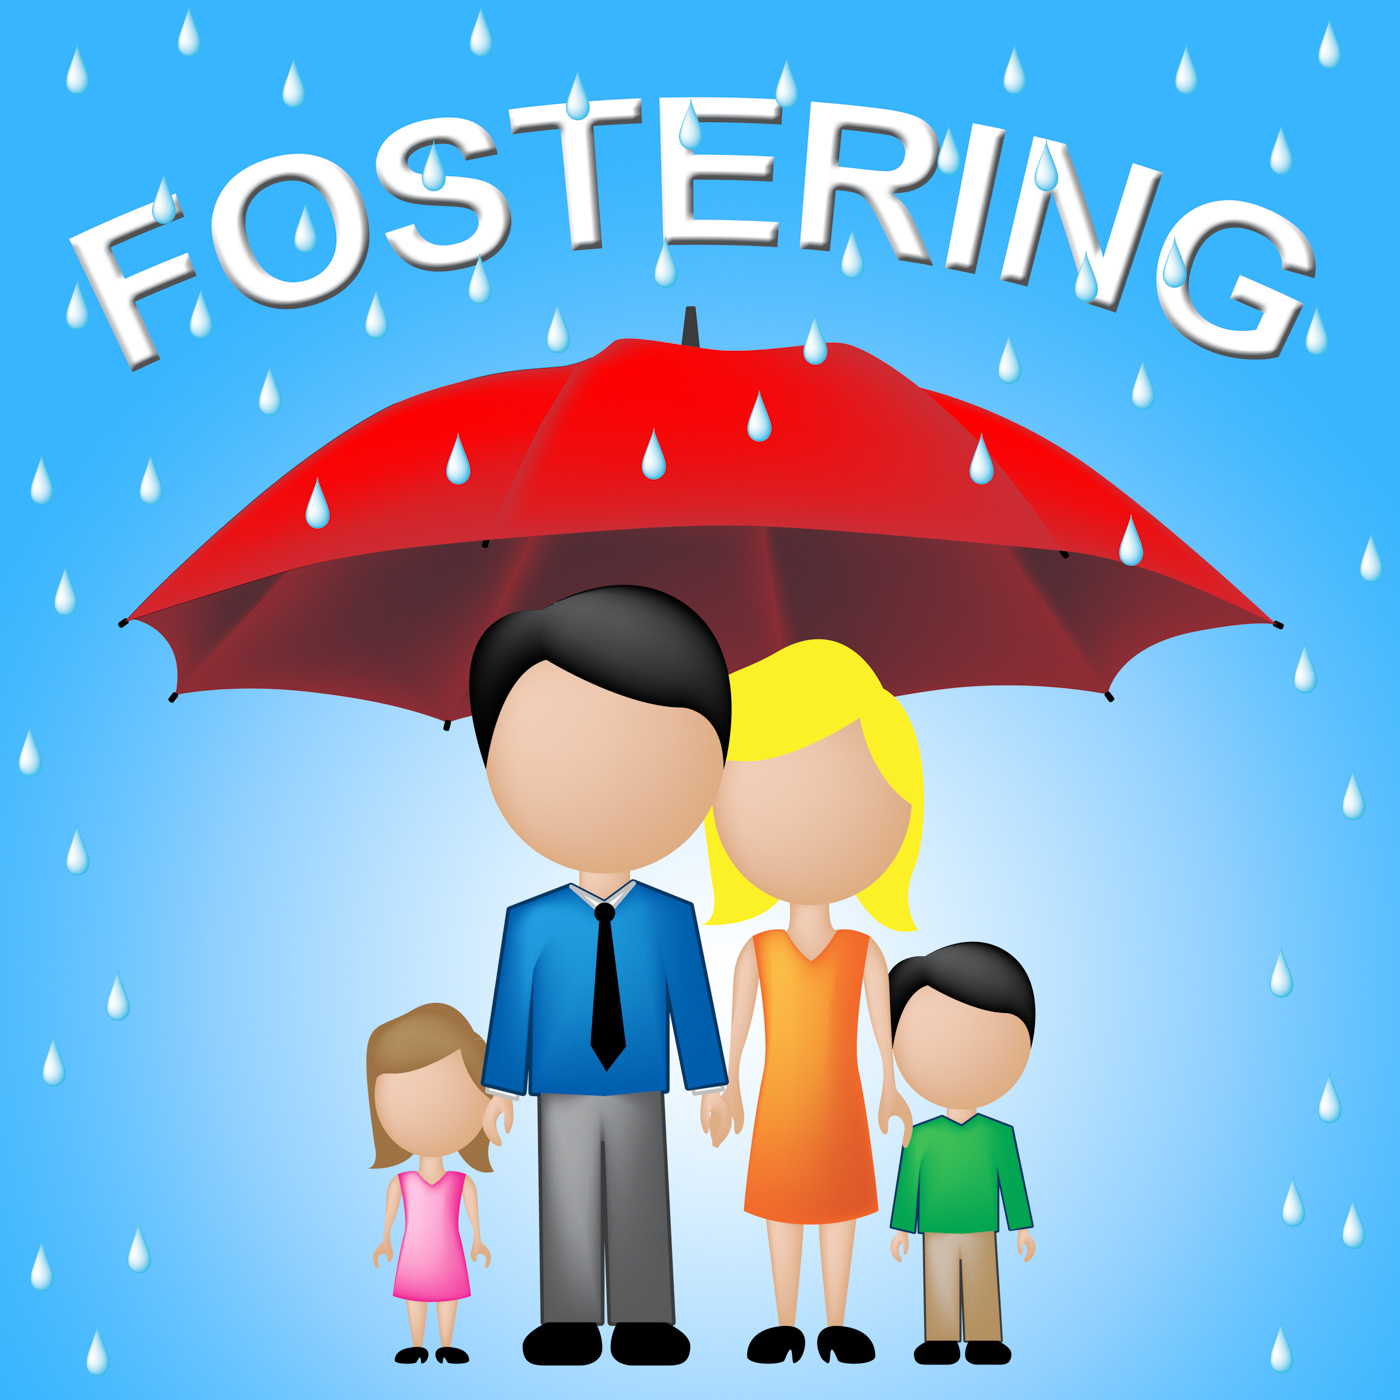 Fostering family indicates relative adoption and umbrellas photo